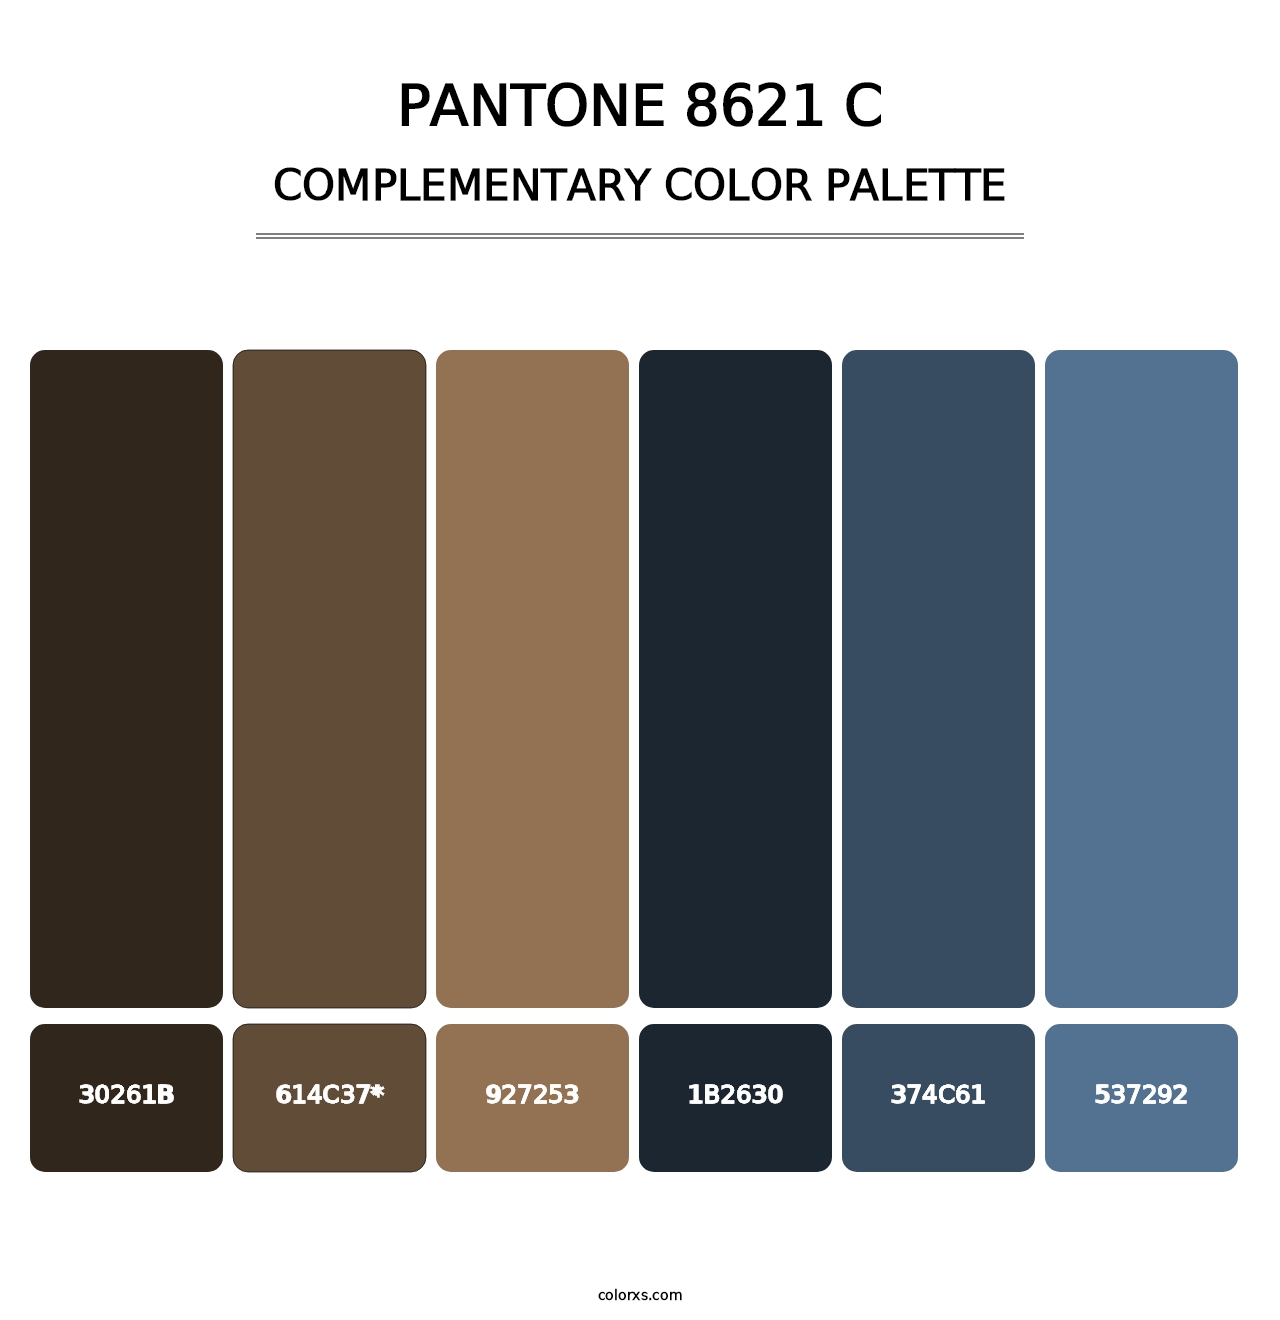 PANTONE 8621 C - Complementary Color Palette